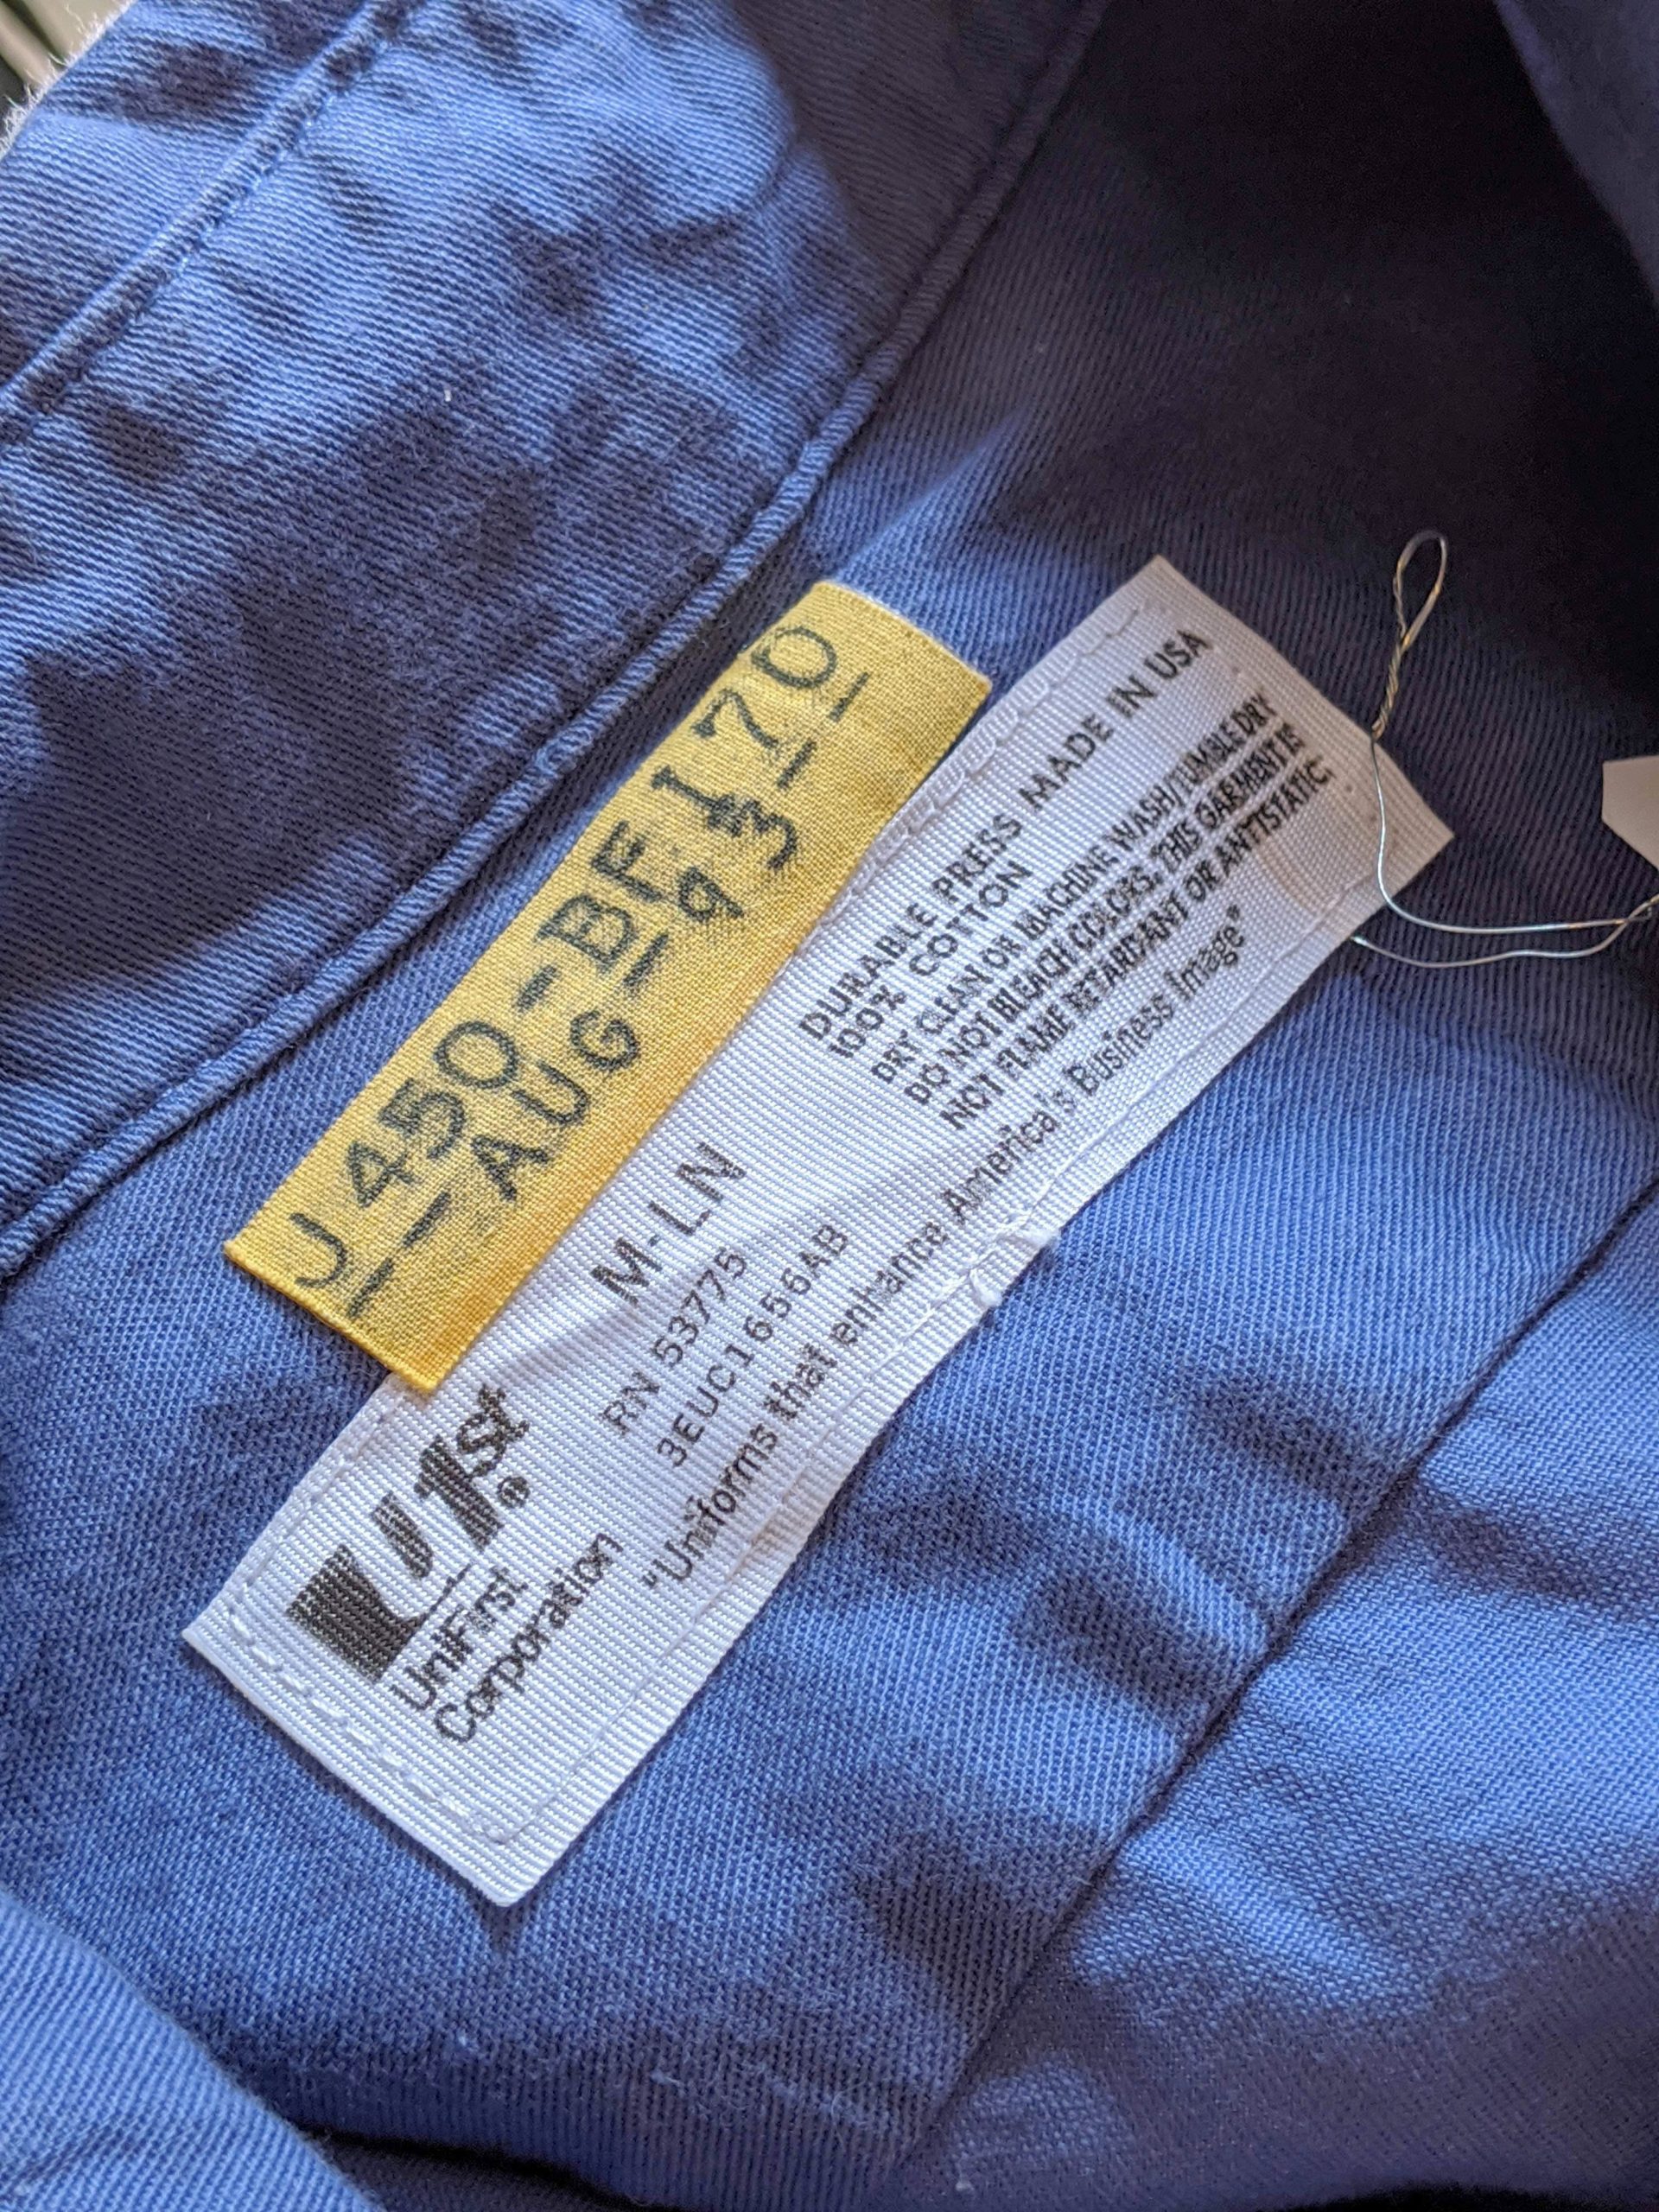 USA UniFirst L/S Cotton Work Shirt 送料無料キャンペーン中! – ataco